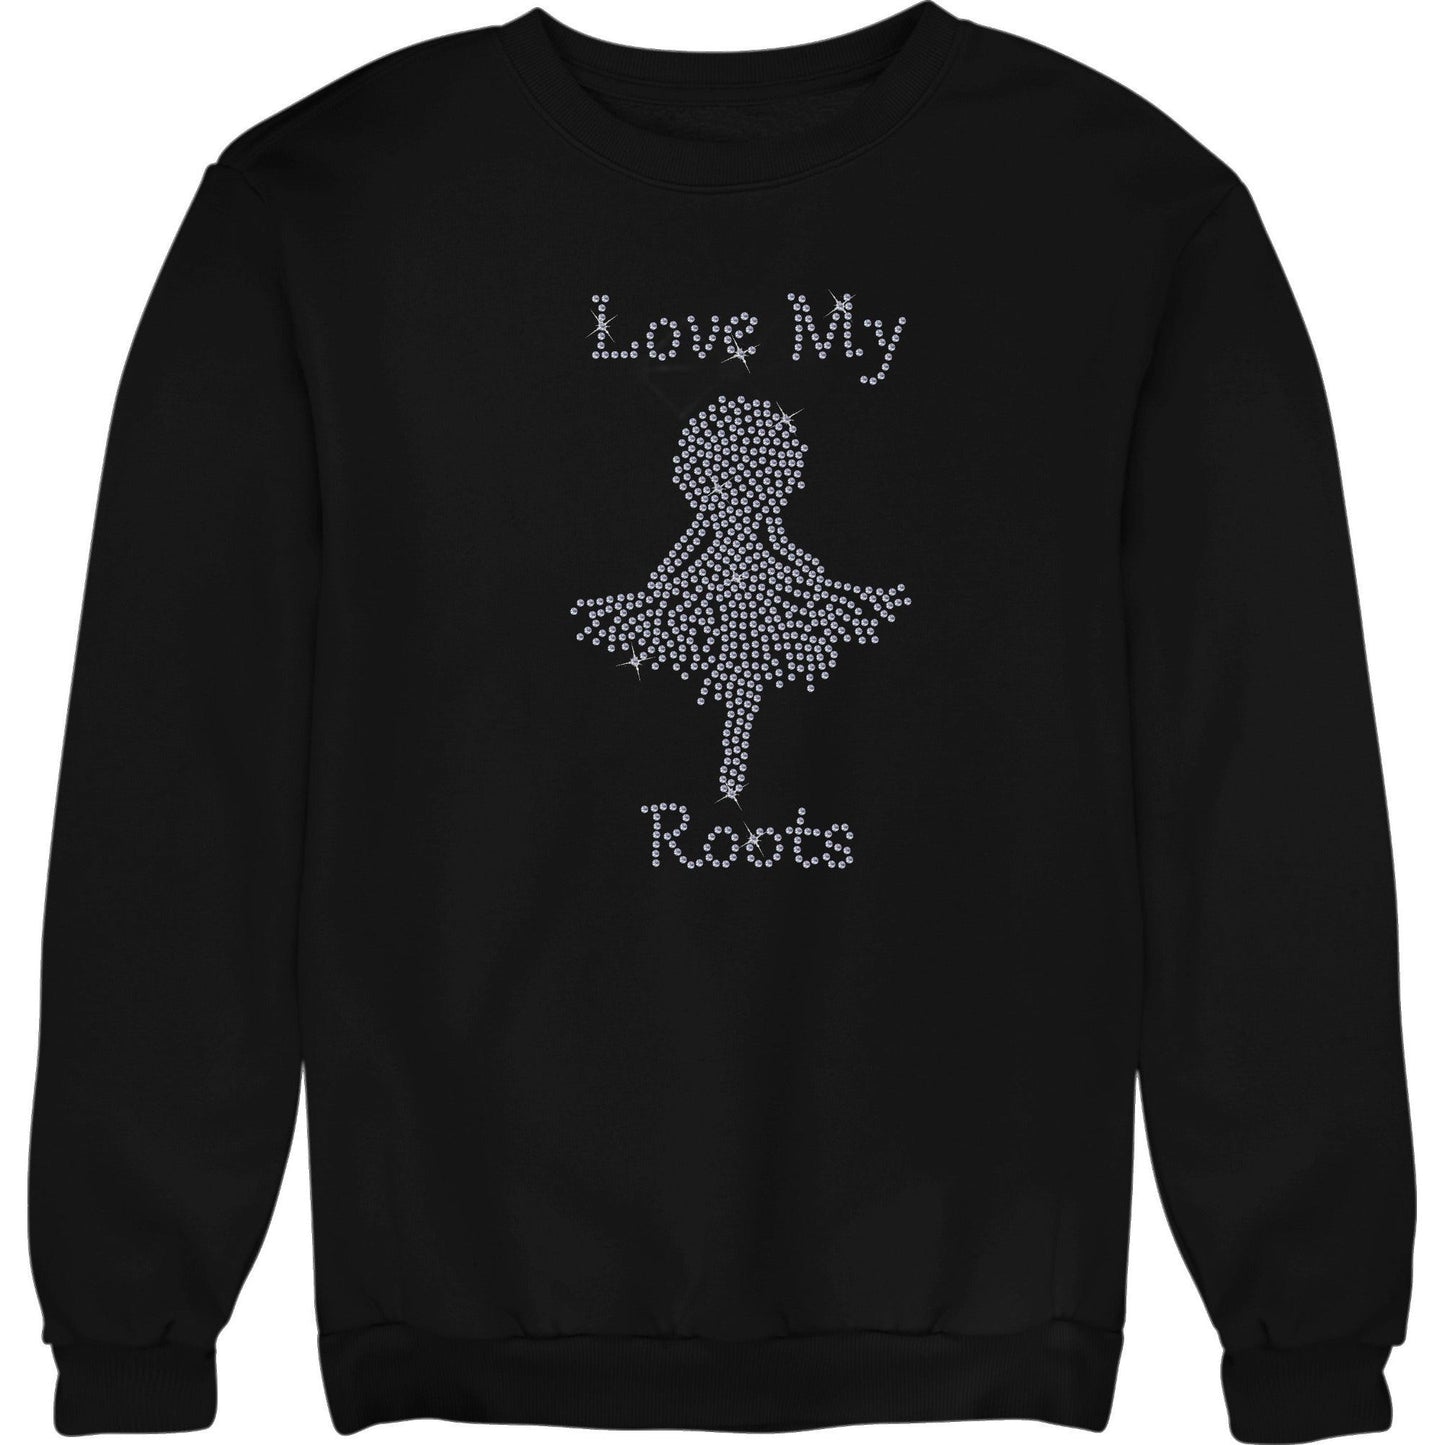 Love My Roots Black Sweatshirt